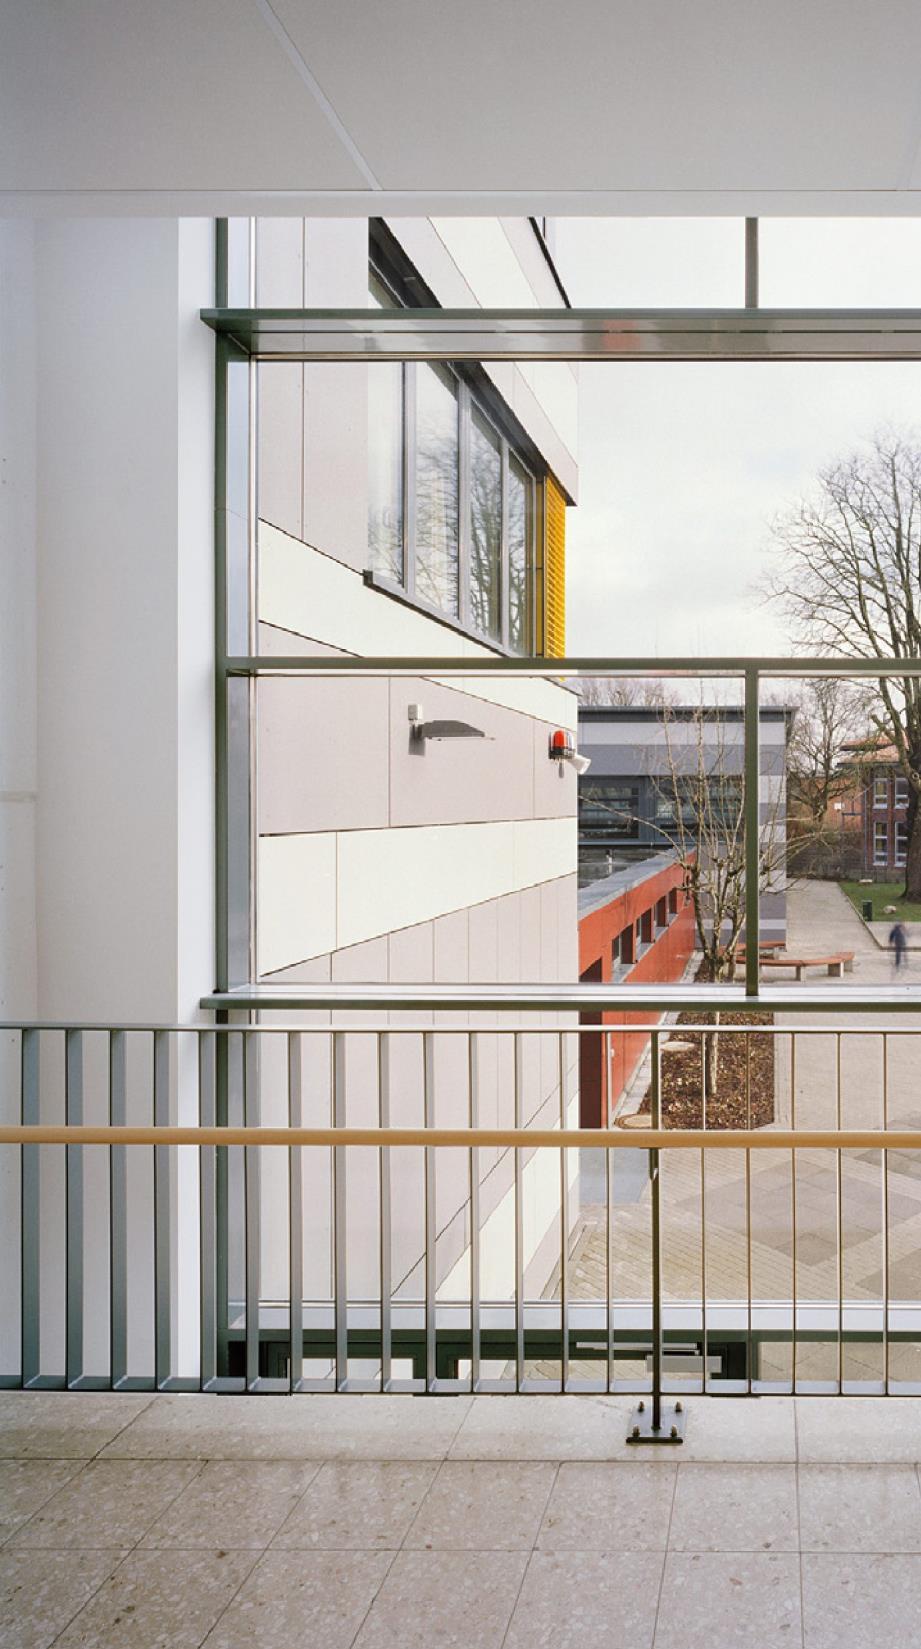 PROJECT INFORMATION HISTORY Hamburg International School was first establised in 1973 by Schlutz & Partner Architekten Company. It was primarily made of concrete steel frame and infill brickwork.